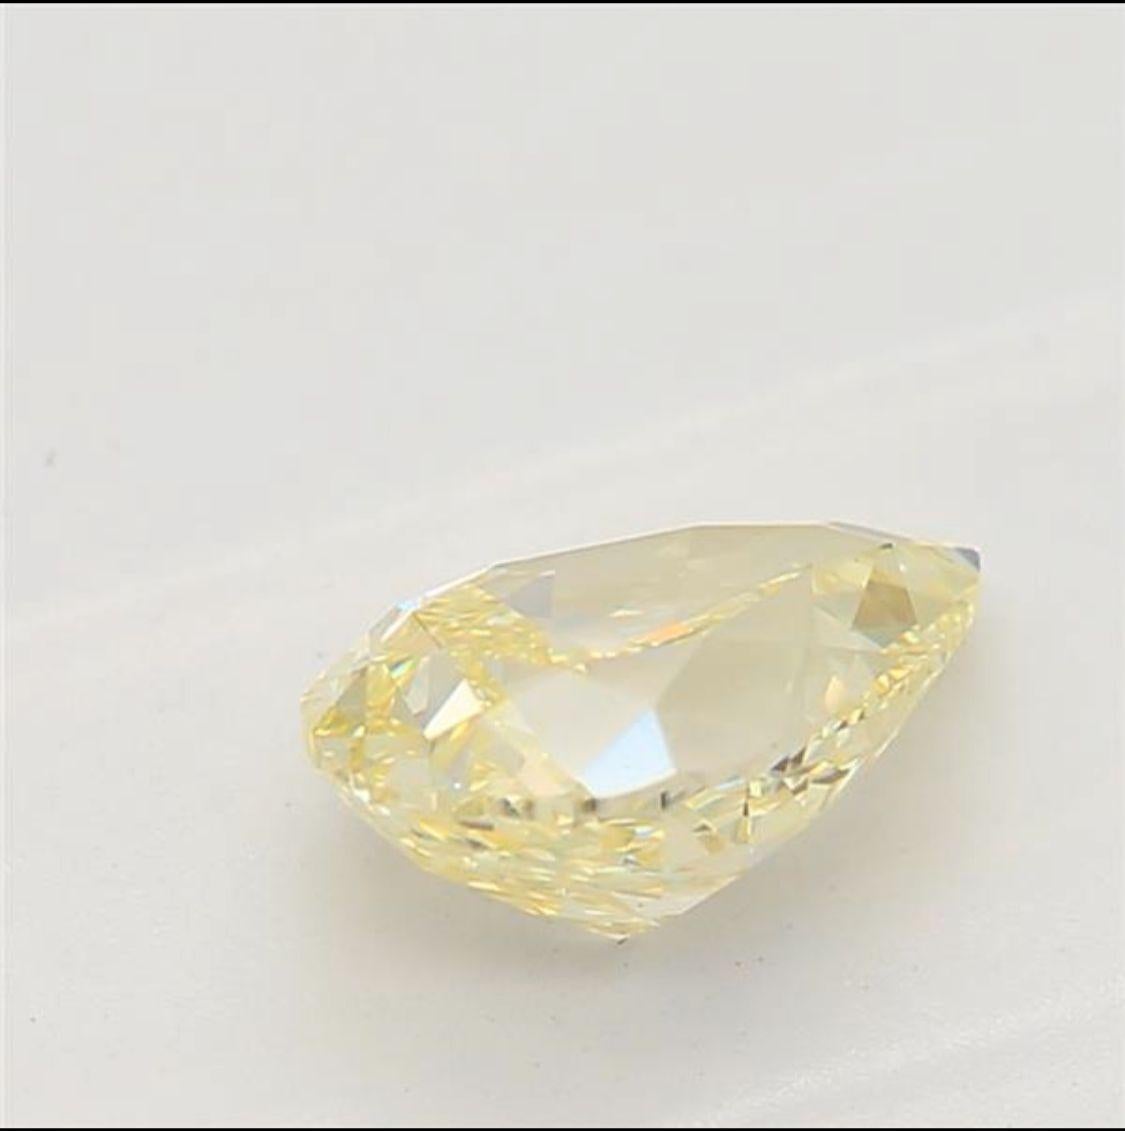 Pear Cut 0.59 Carat Fancy Light Yellow Pear cut diamond VVS1 Clarity GIA Certified For Sale